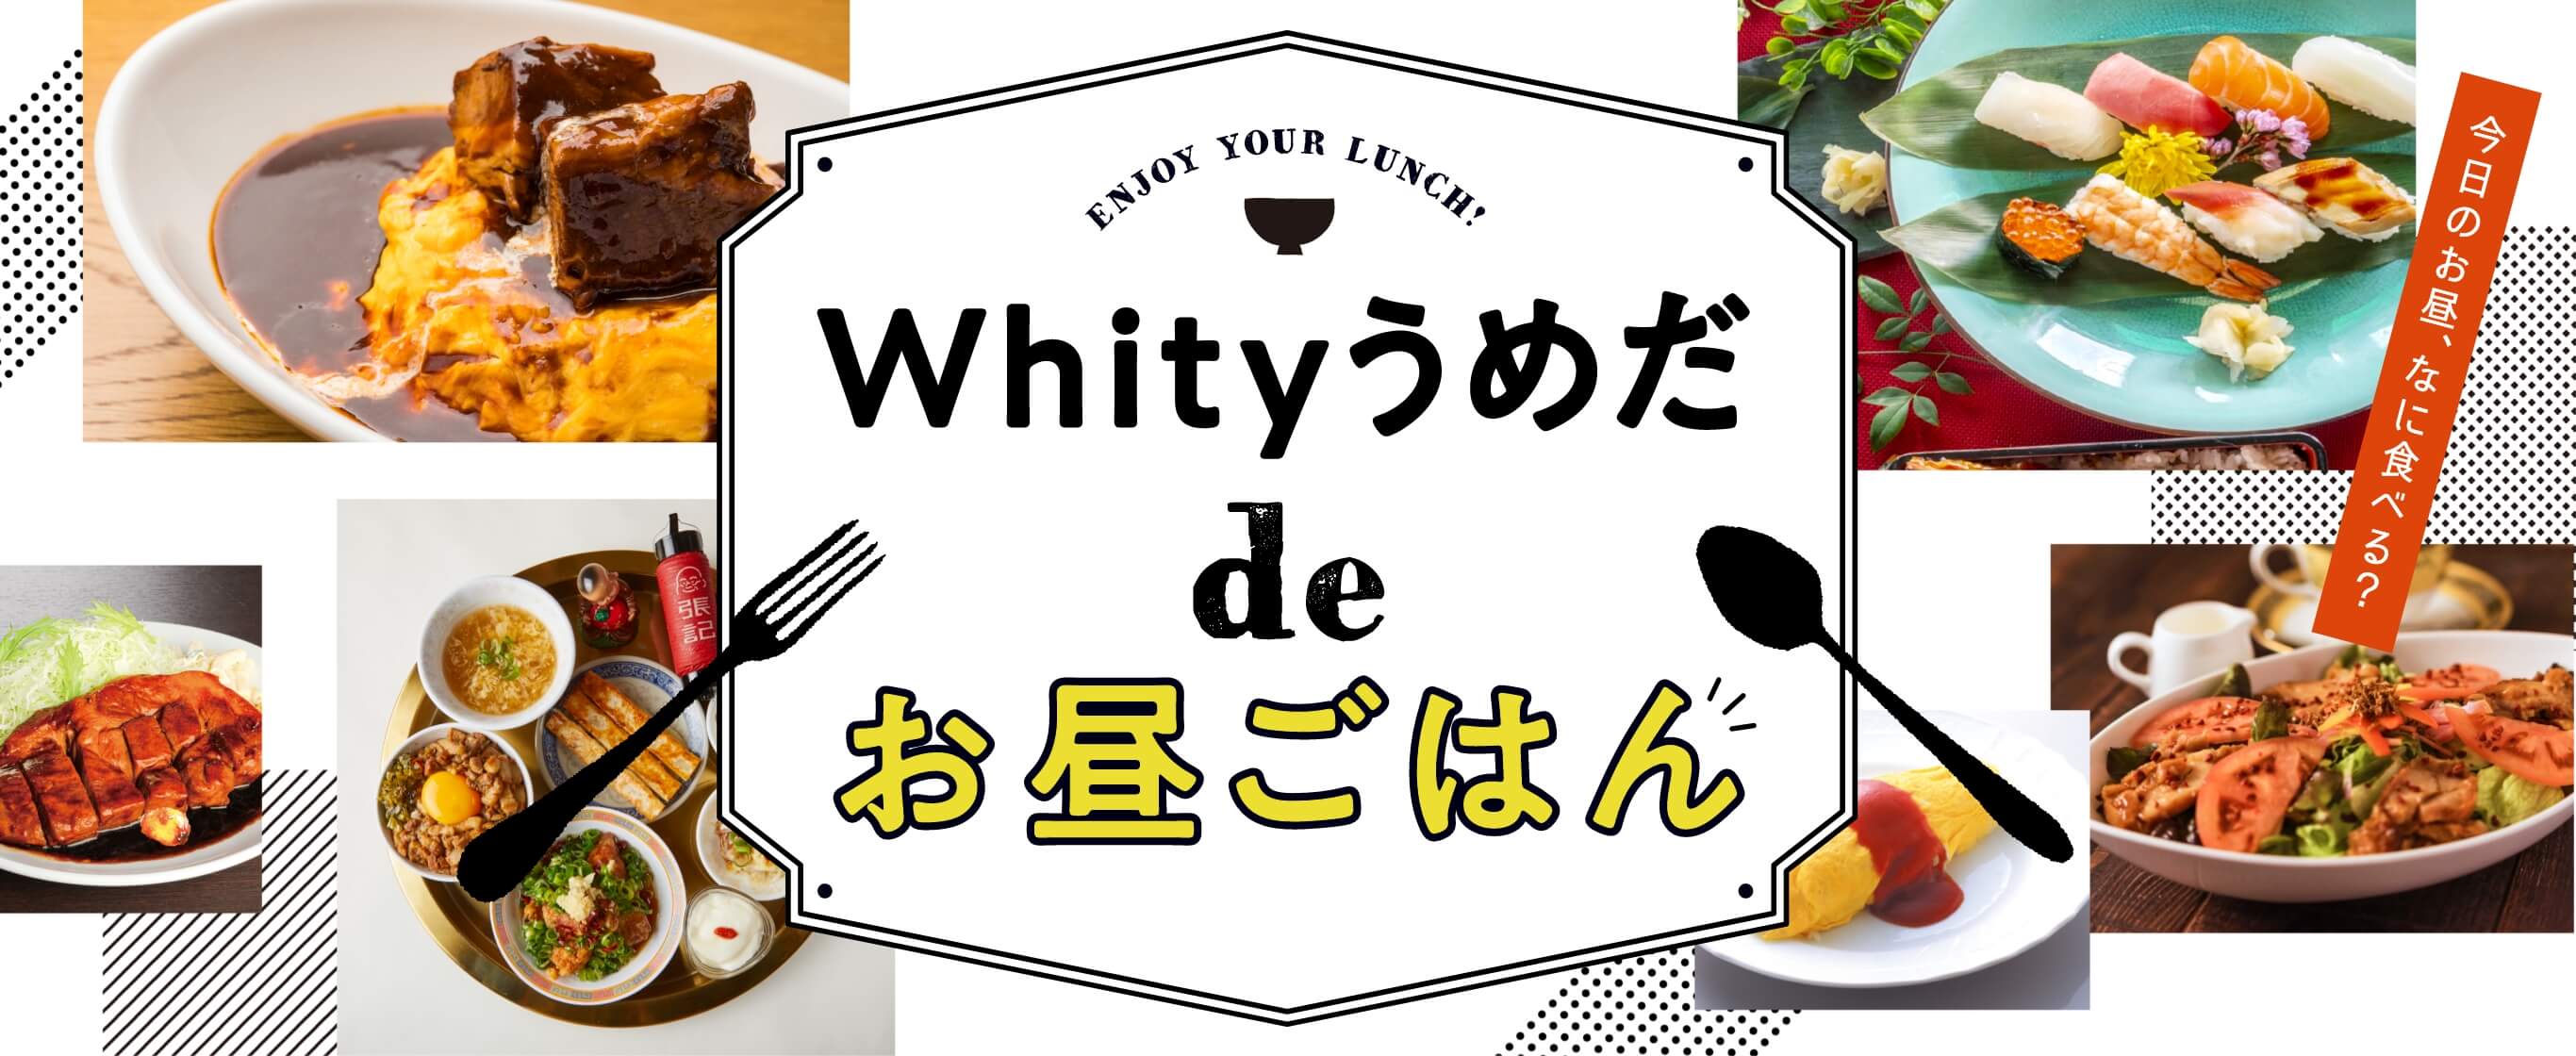 Whity 우메다 de 점심밥